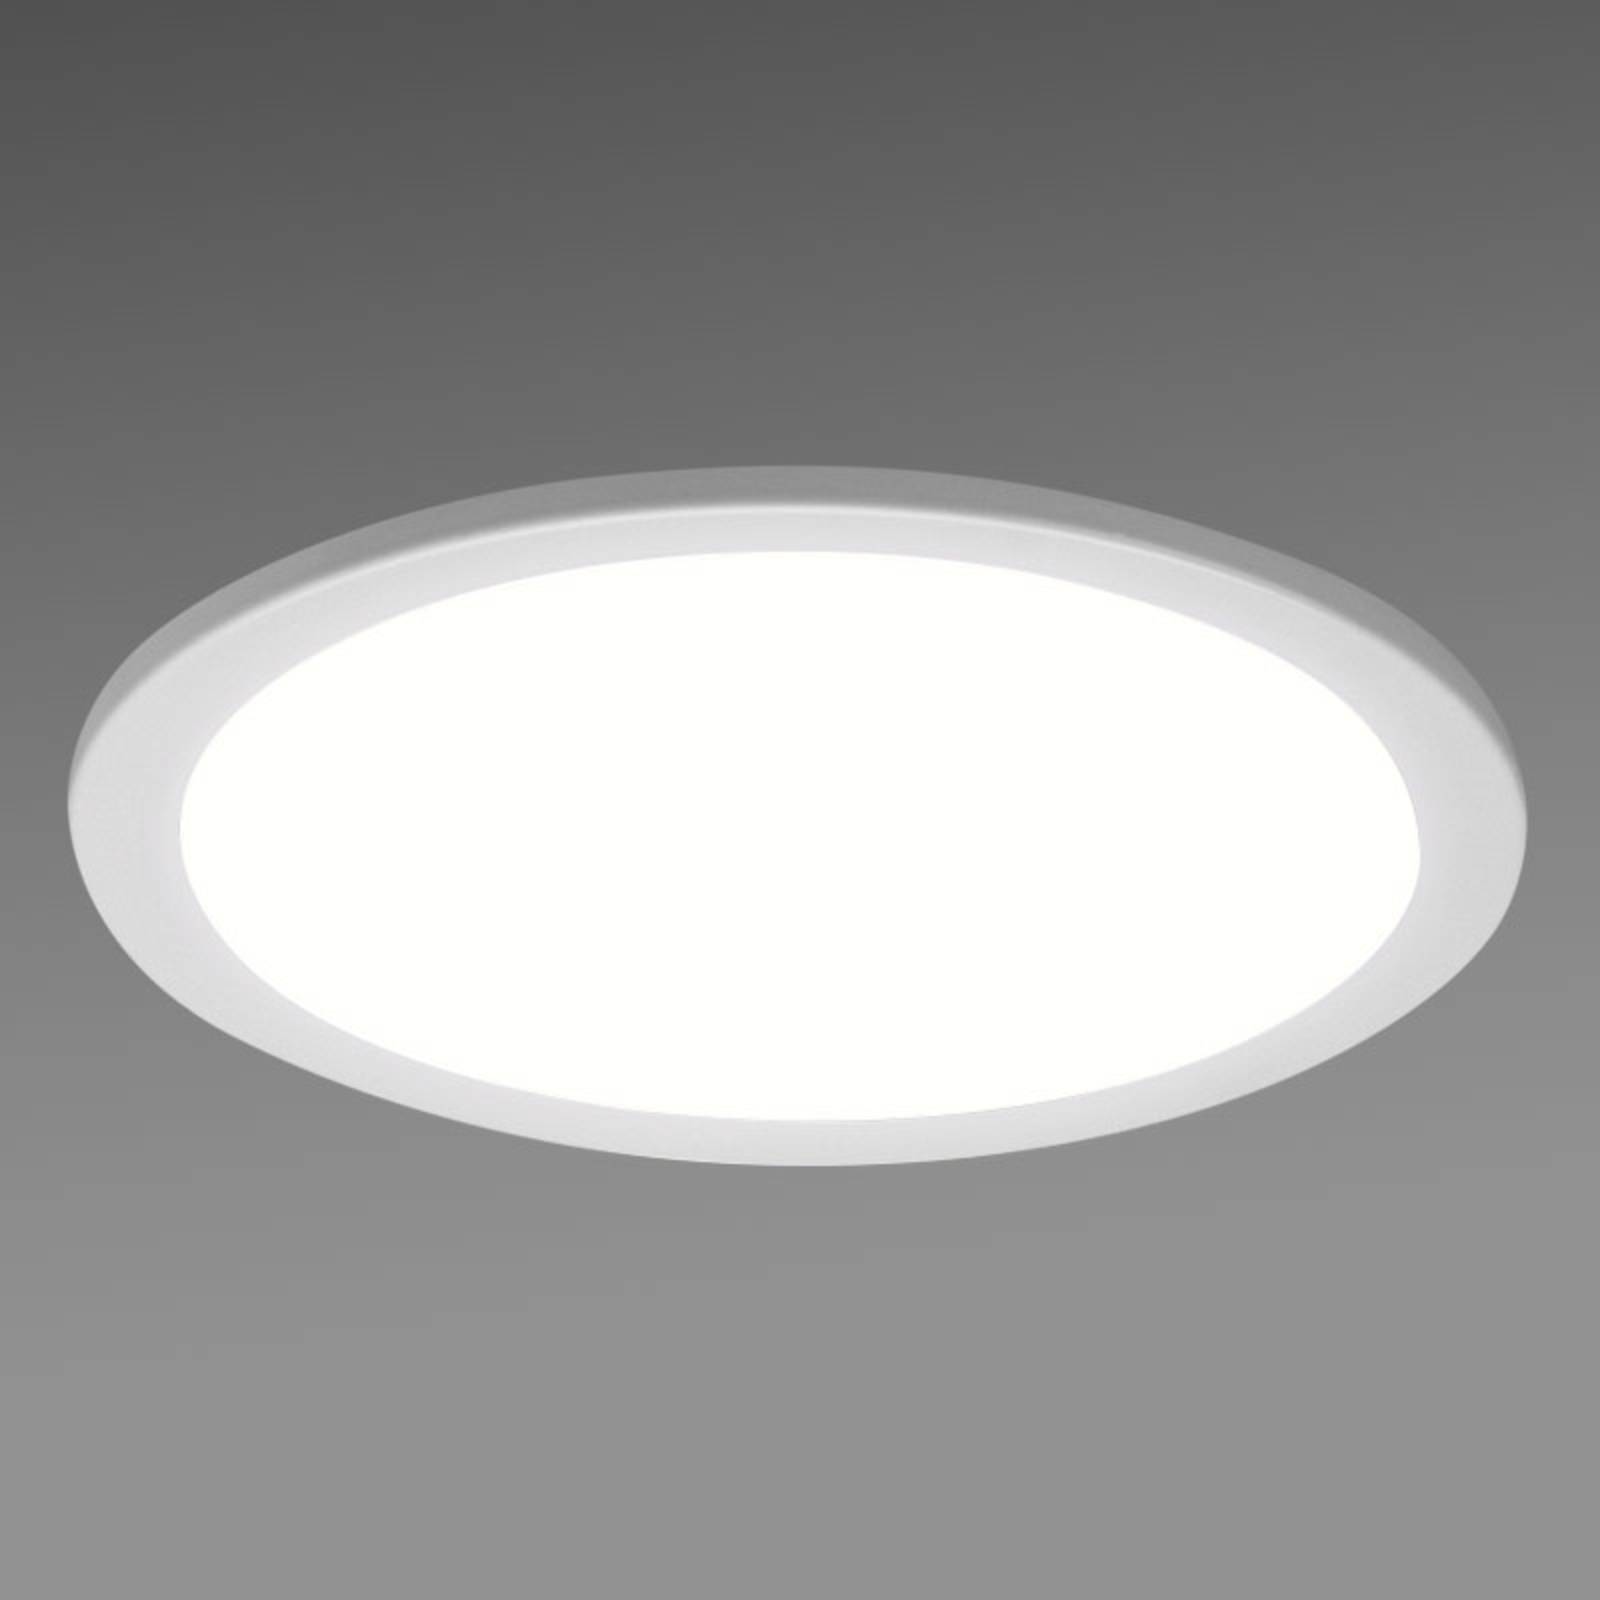 Downlight encastrable LED SBLG rond, 3 000 K